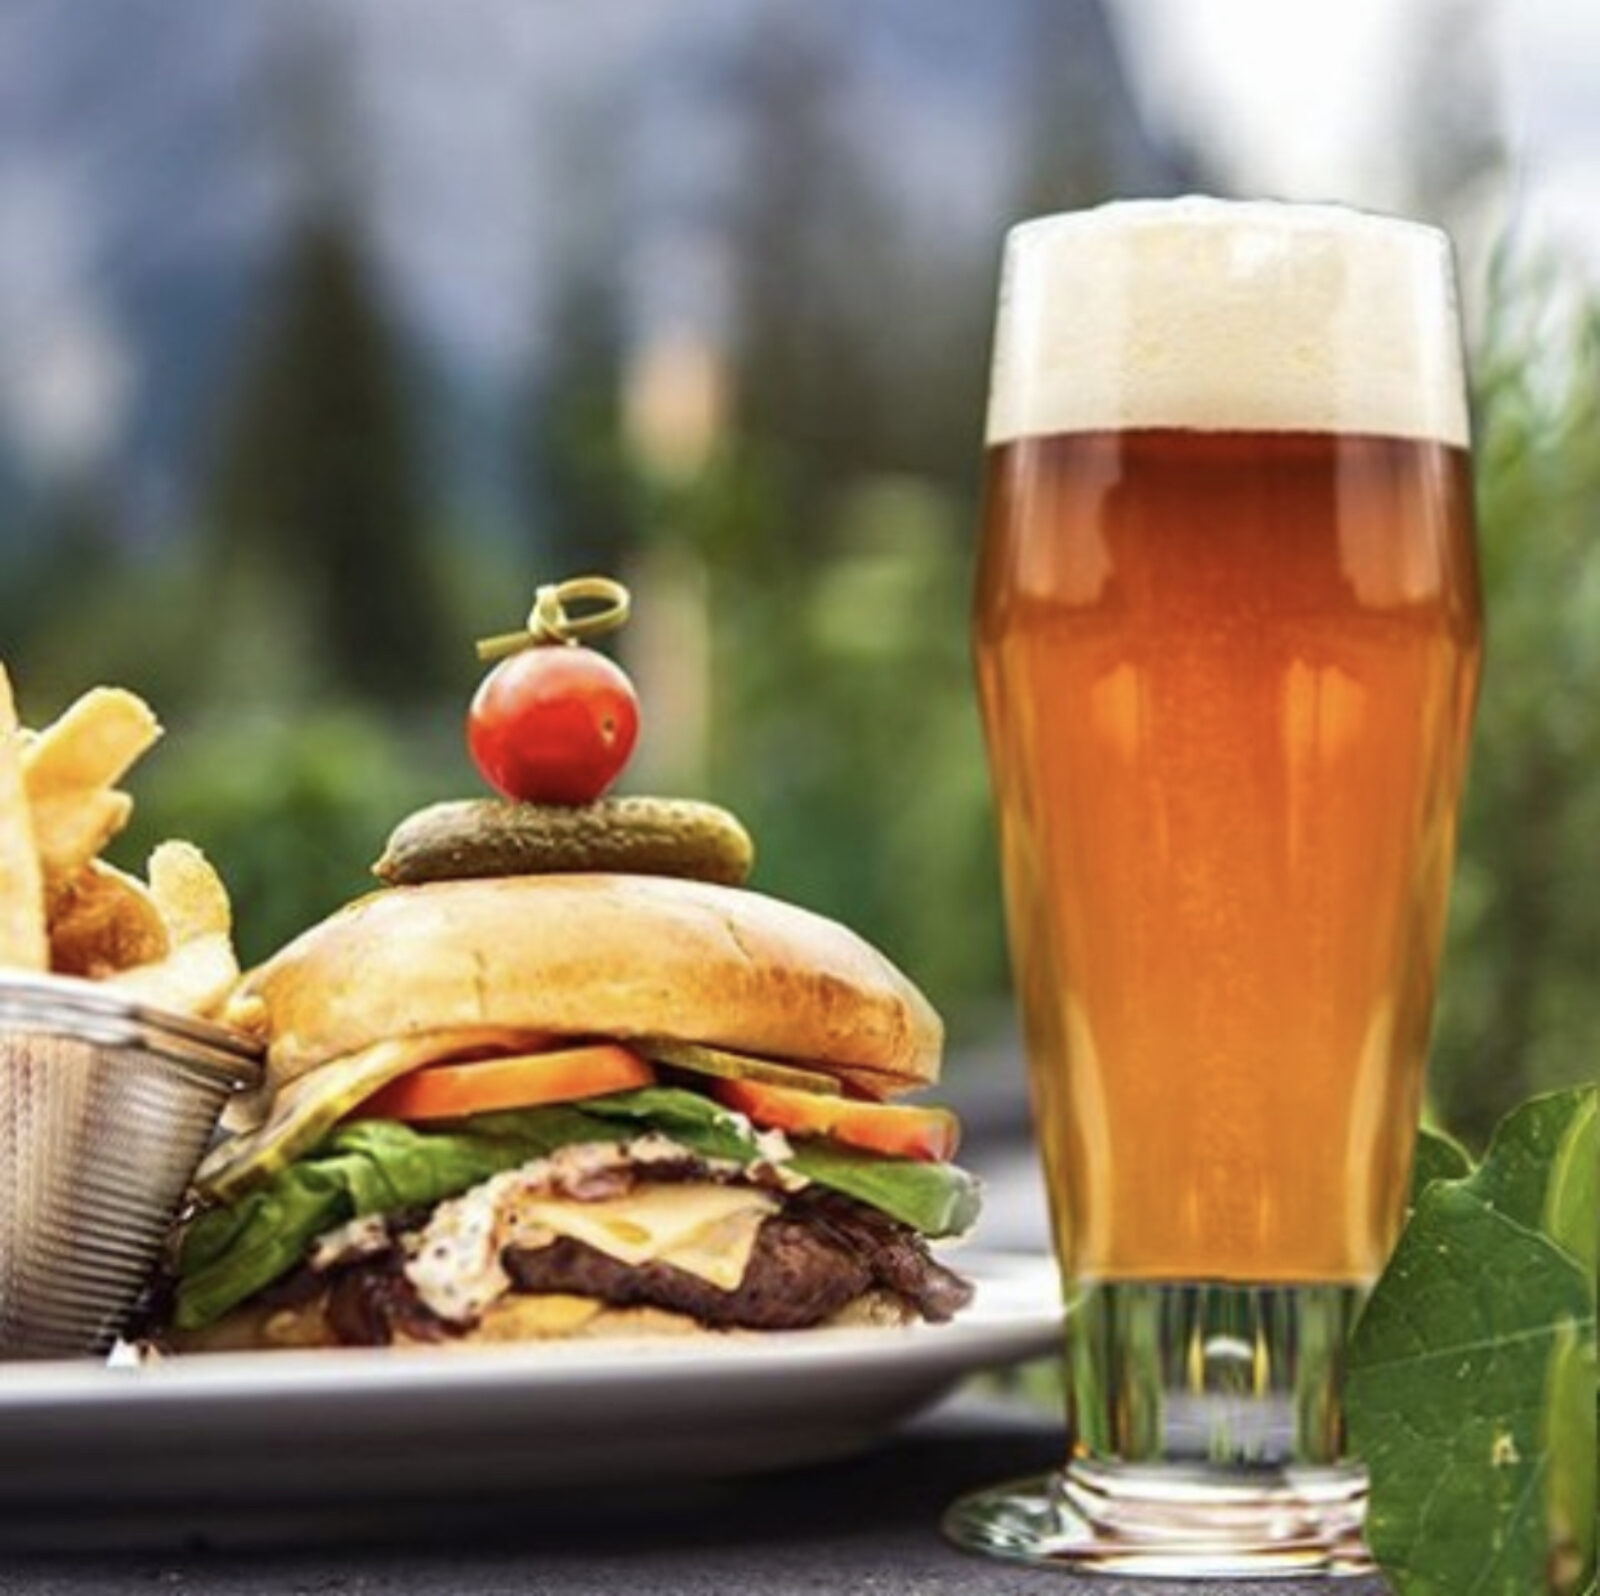 Stirling burger and beer